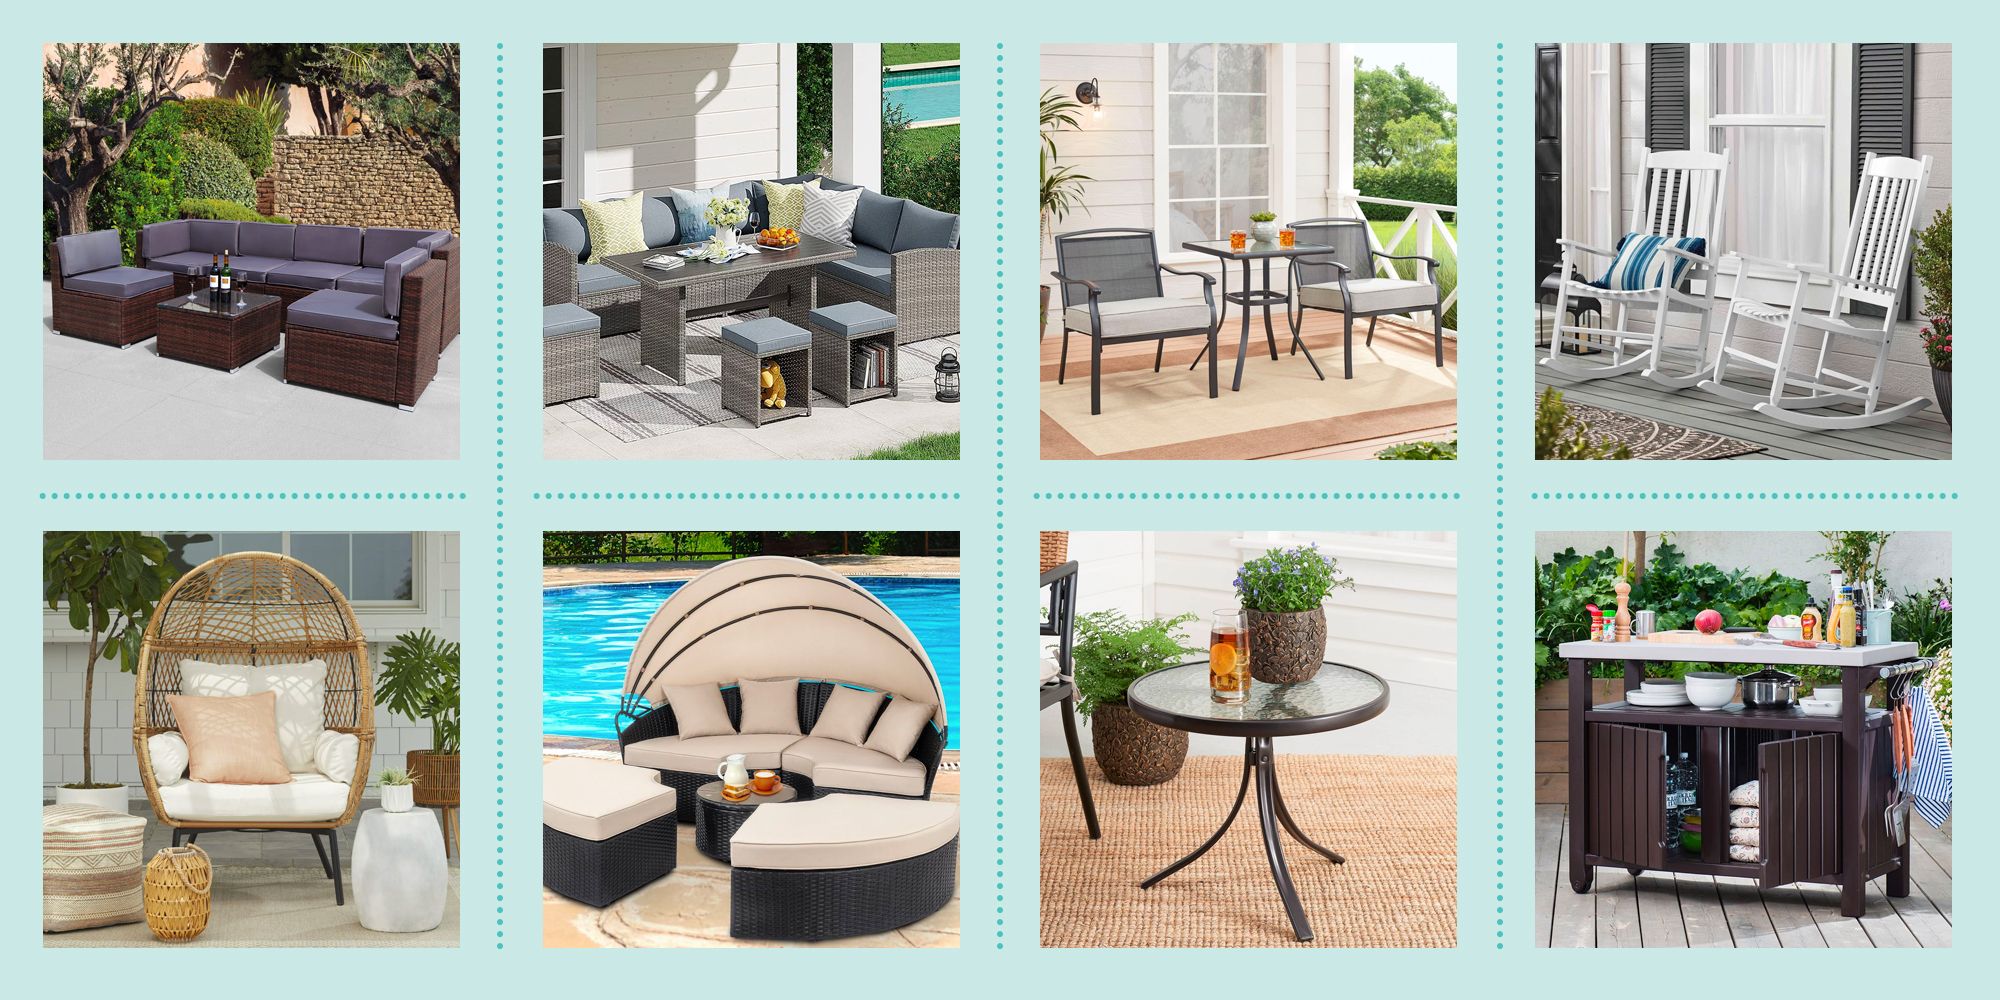 Our Top Picks: Walmart Patio Furniture & Outdoor Decor￼ - VIV & TIM